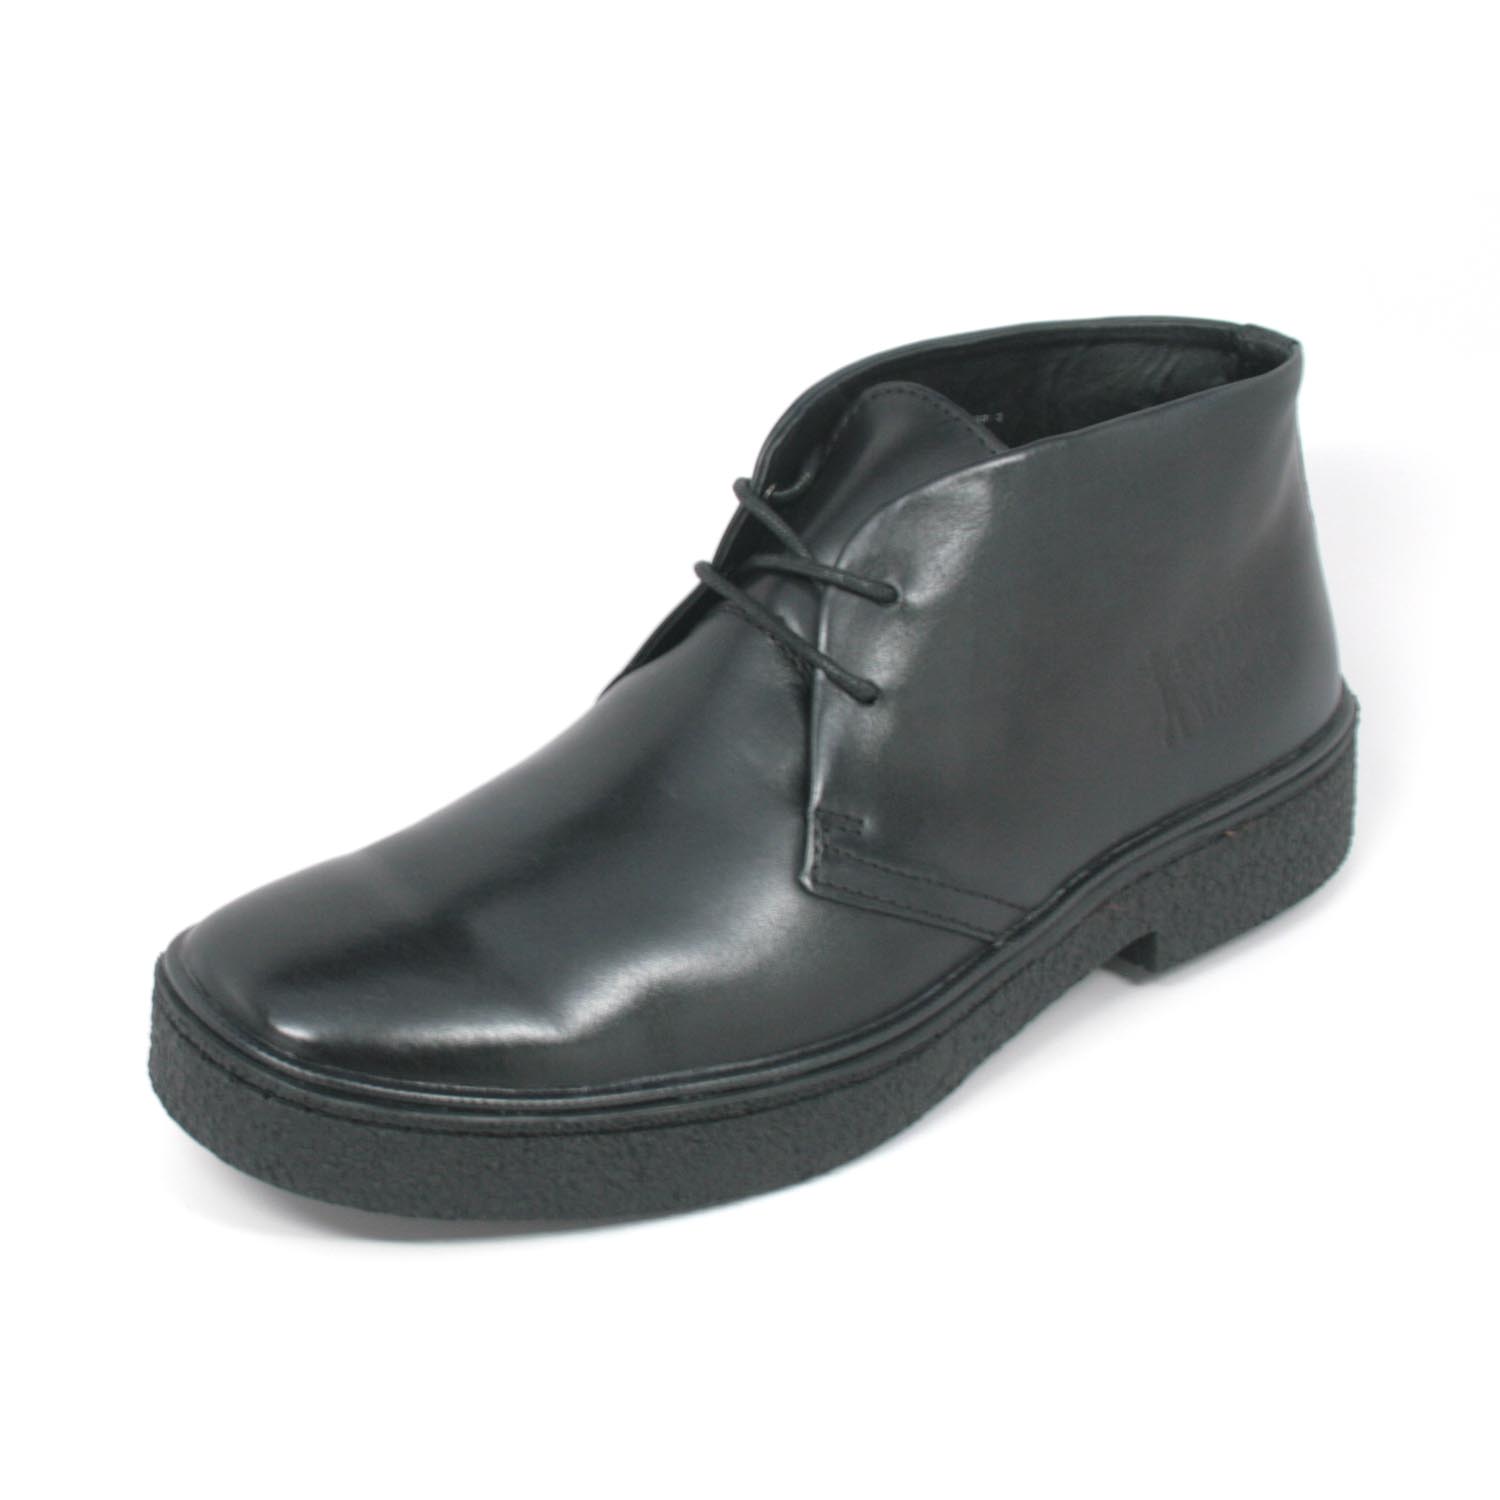 Classic Playboy Chukka Boot Black Leather [1226-1] - $118.00 : British ...